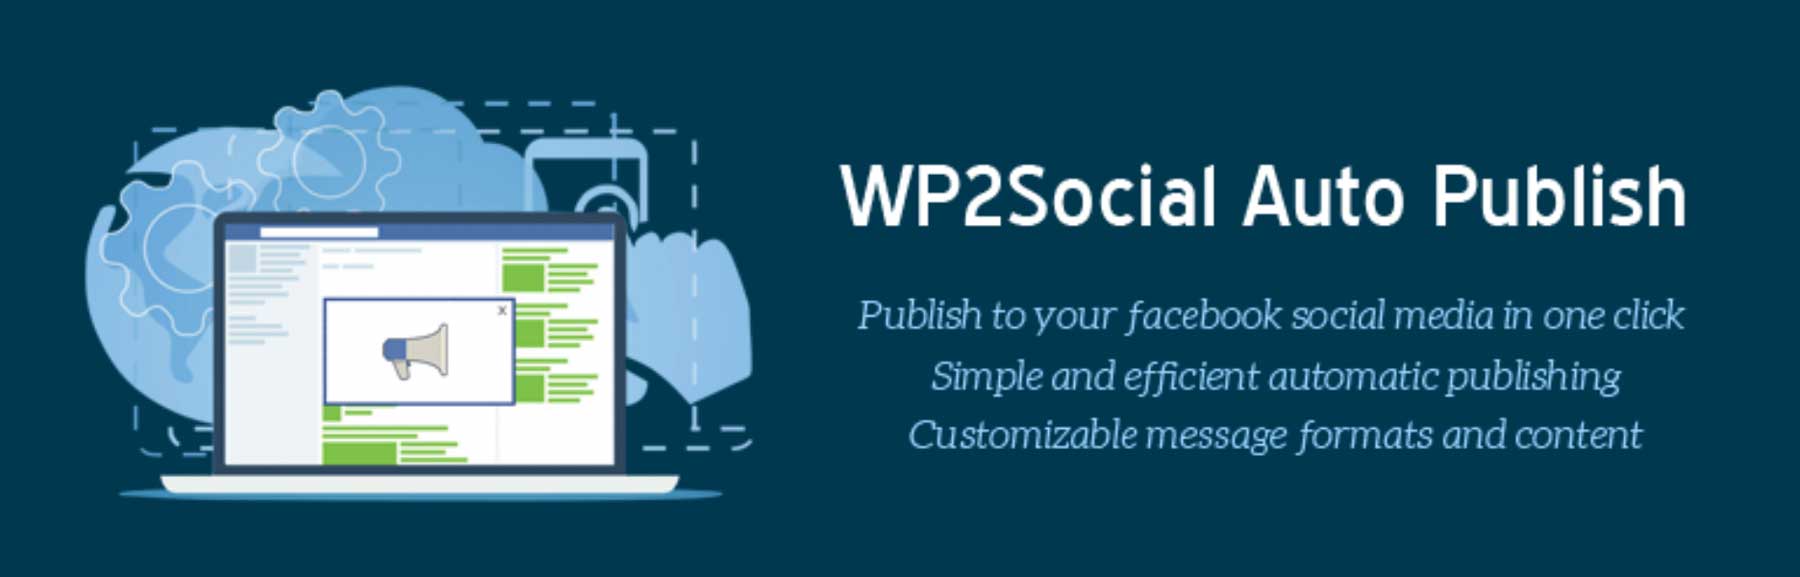 The WP2Social Auto Publish Facebook plugin for WordPress